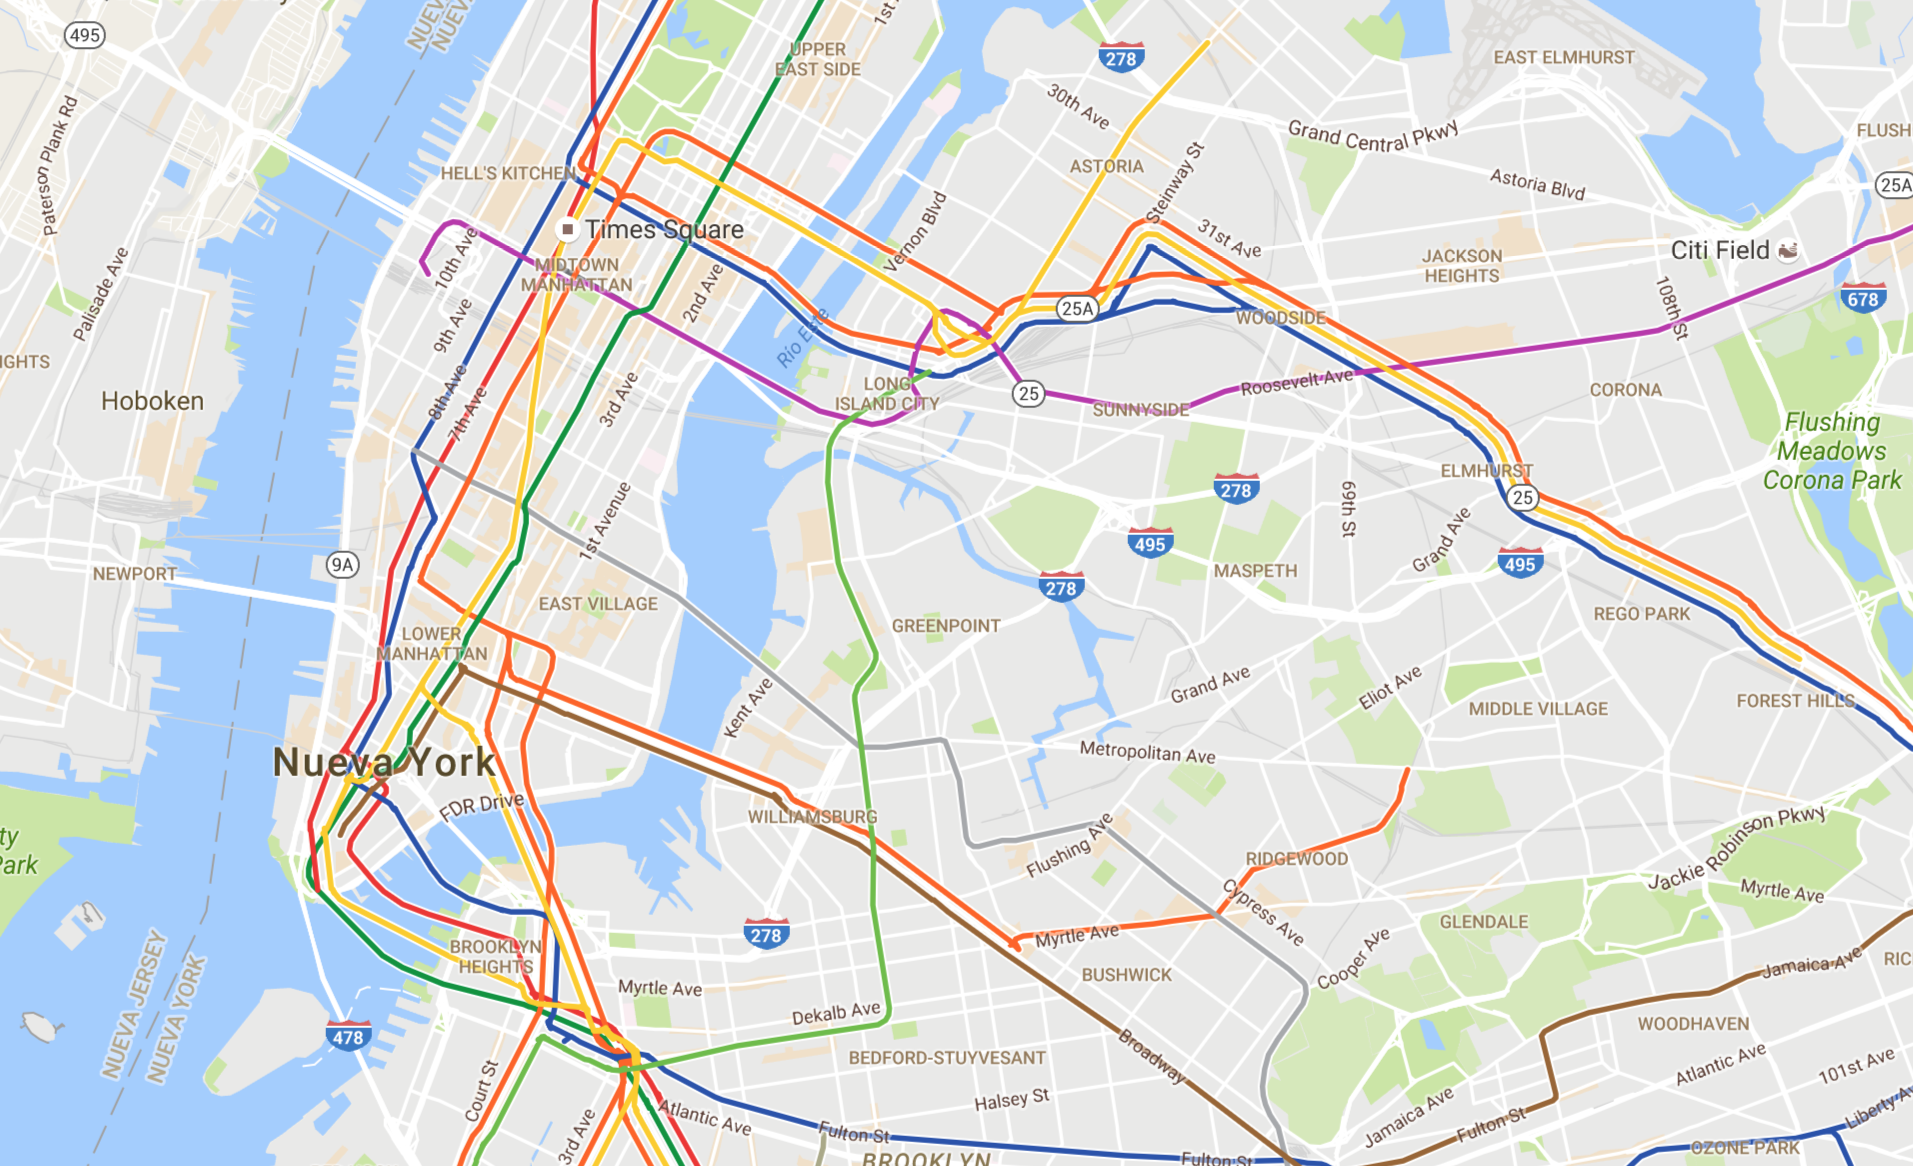 New York City in Google Maps